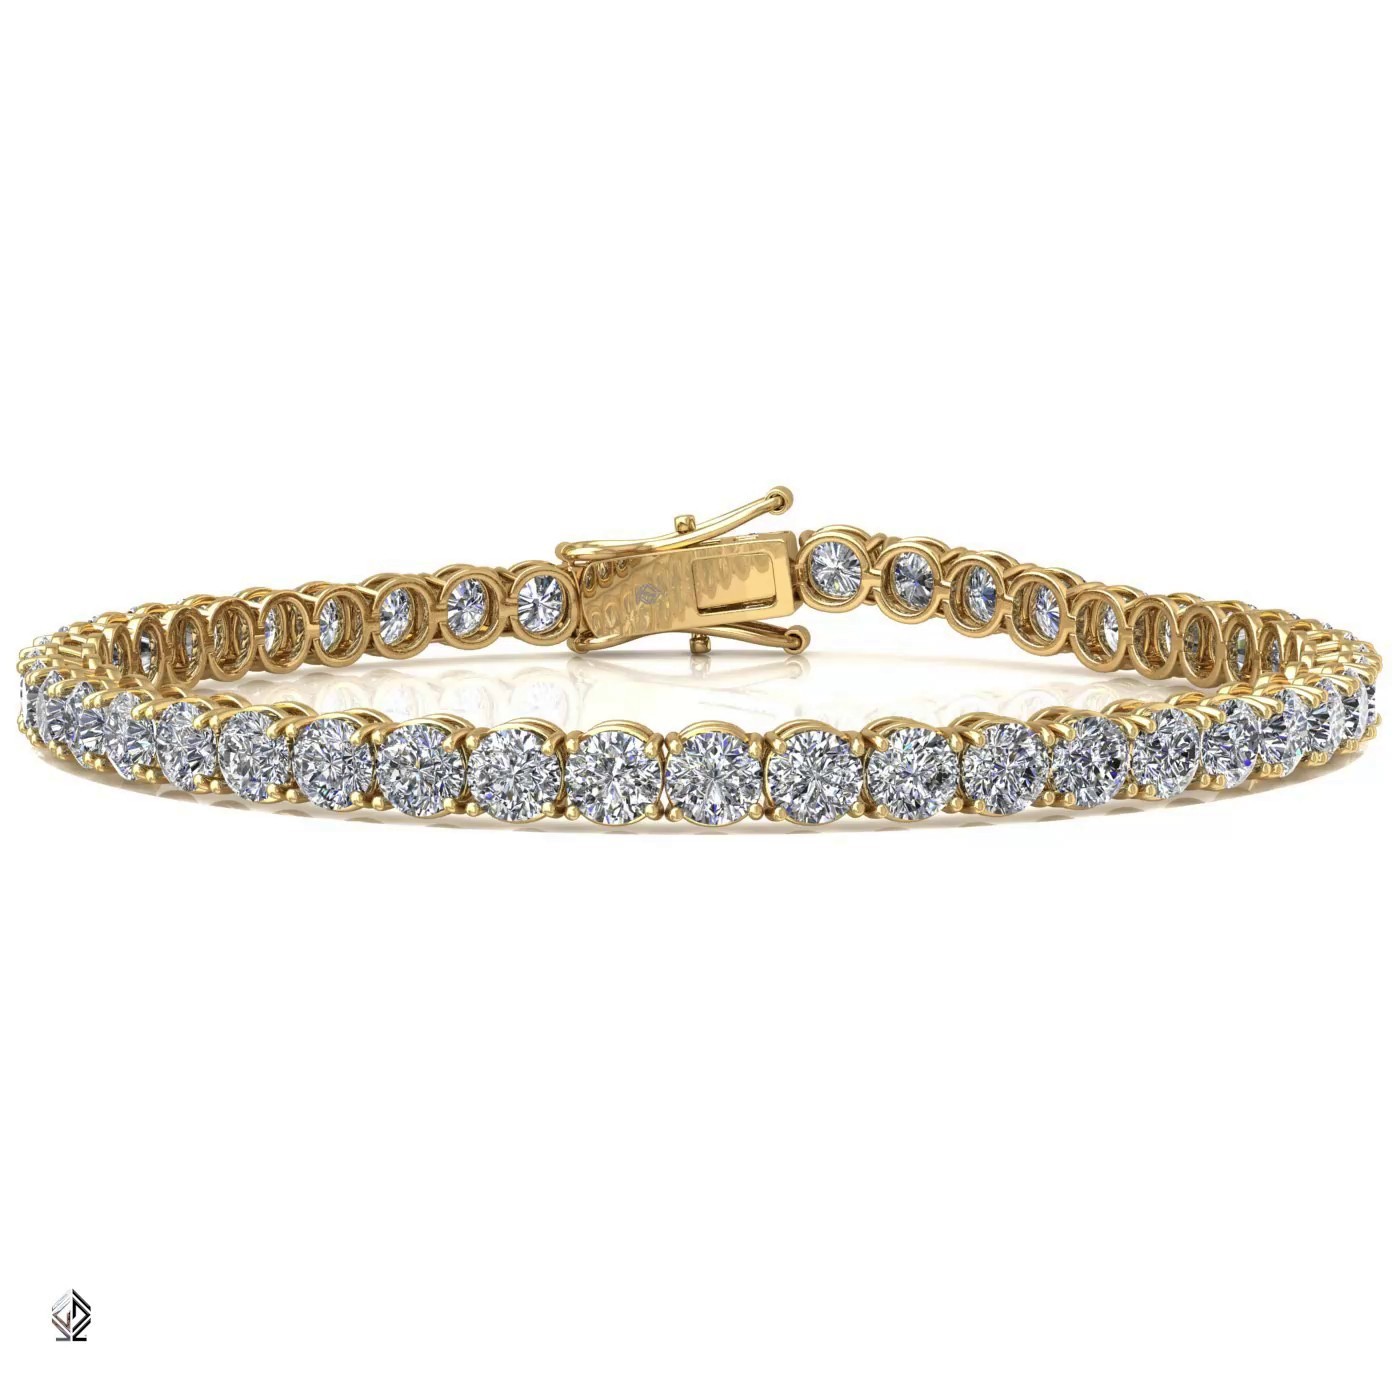 18k white gold 3.3mm 4 prong round shape diamond tennis bracelet in round setting Photos & images